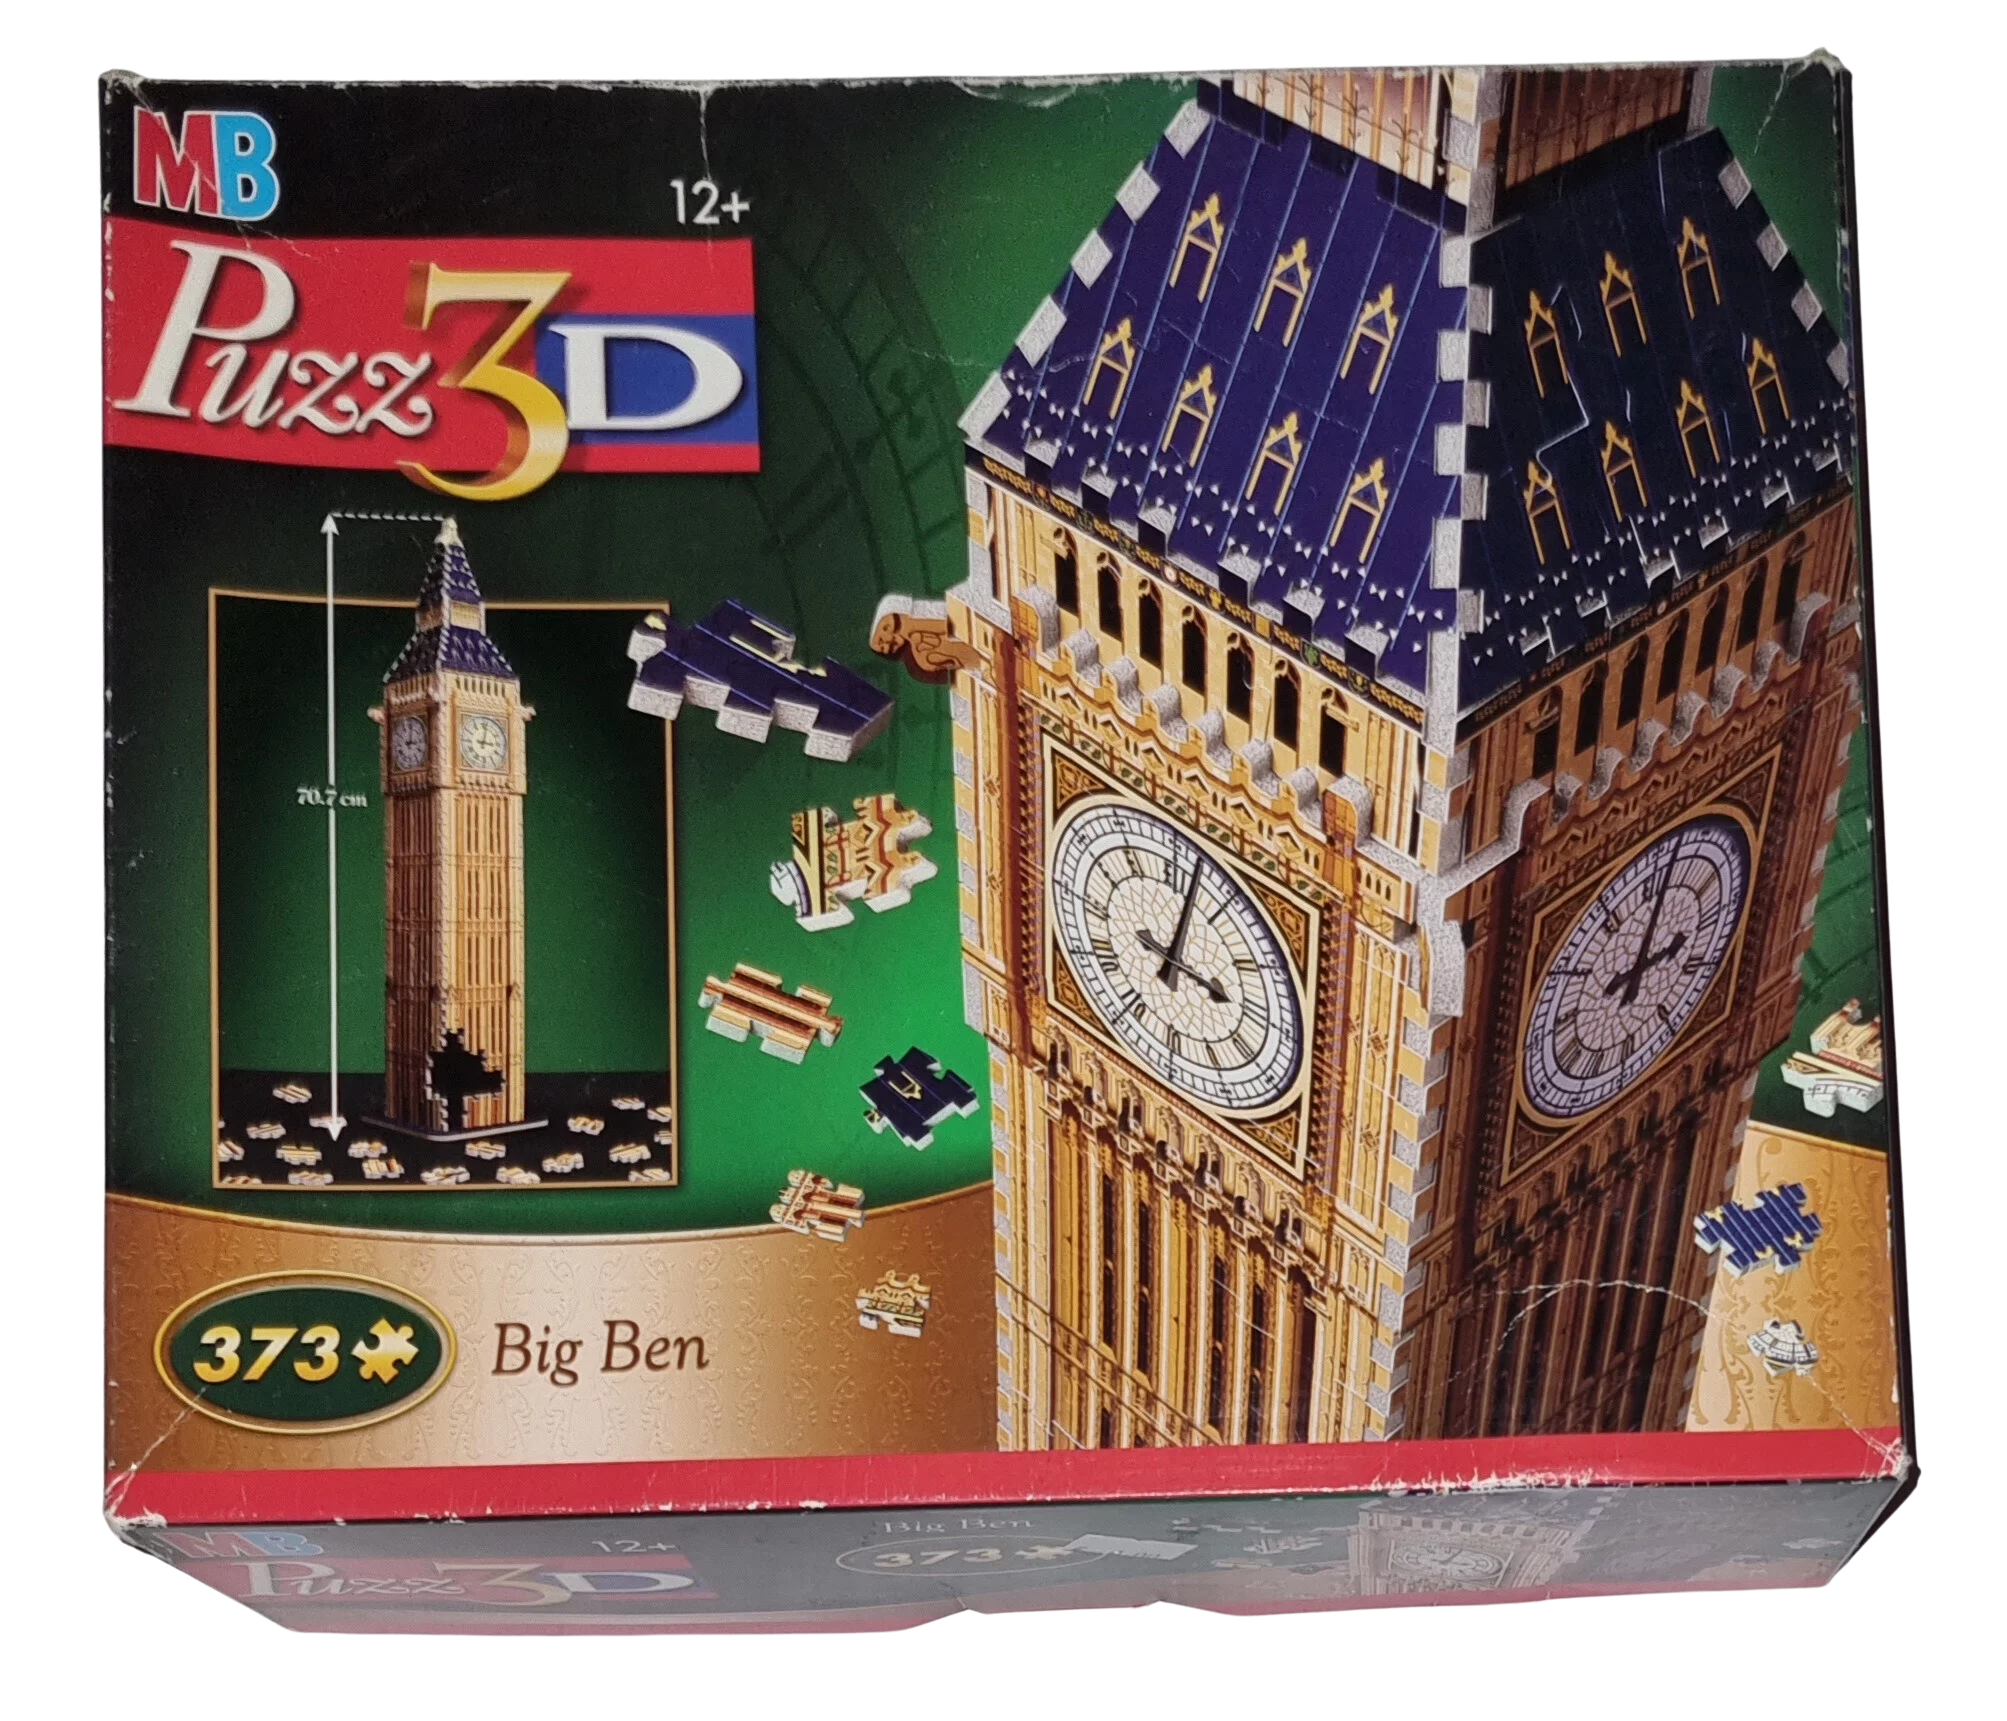 MB Puzz 3D Big Ben 373 Teile